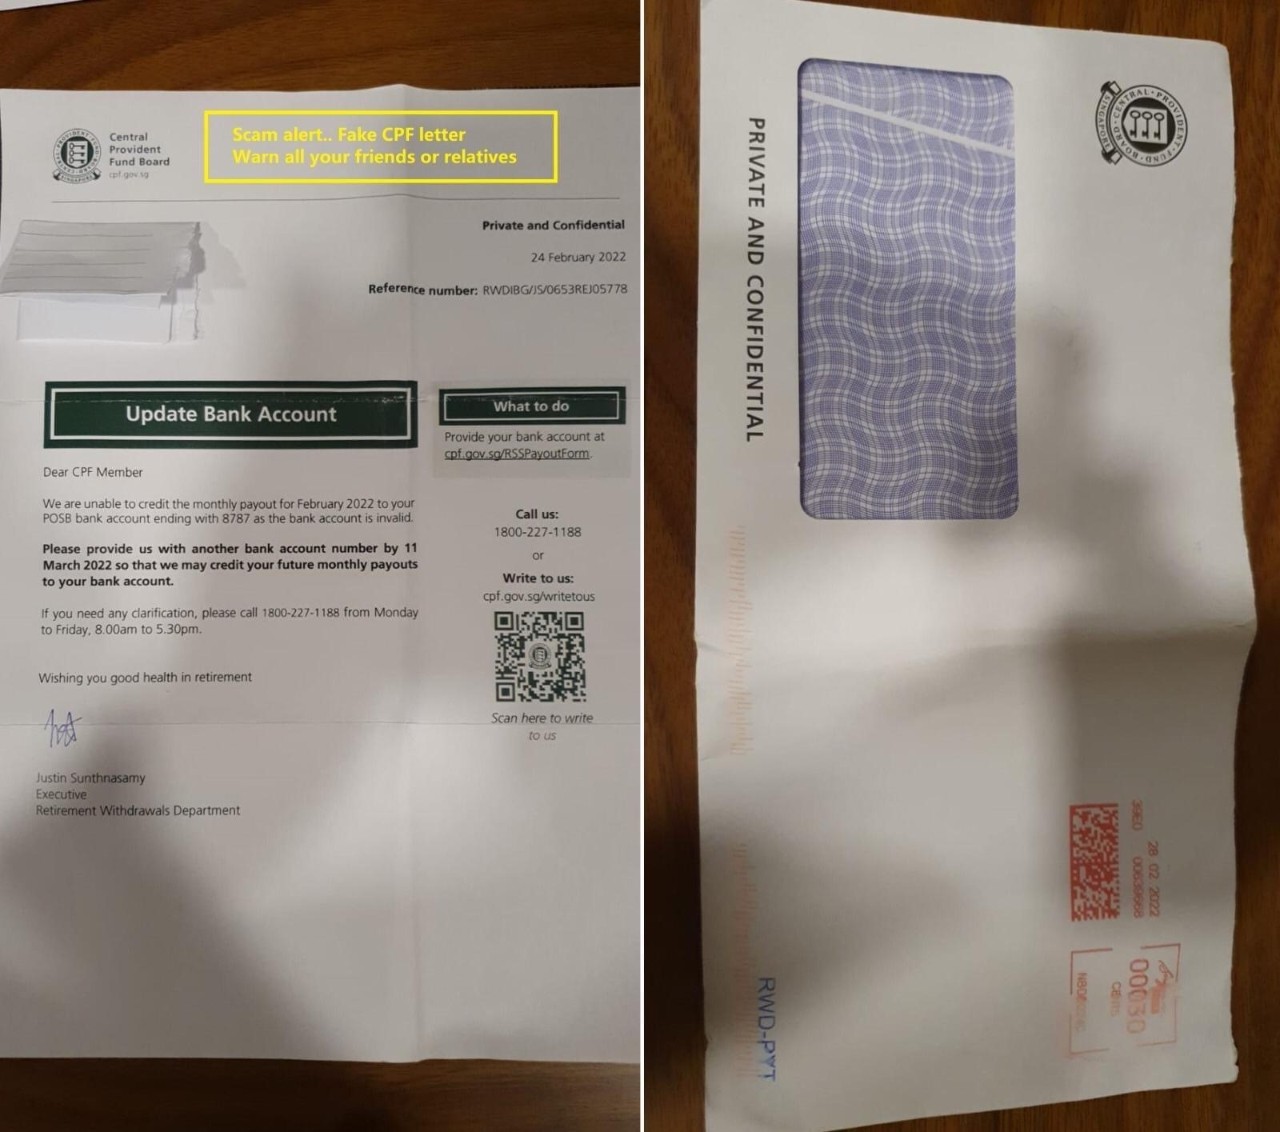 False scam alert regarding letter sent by CPF Board